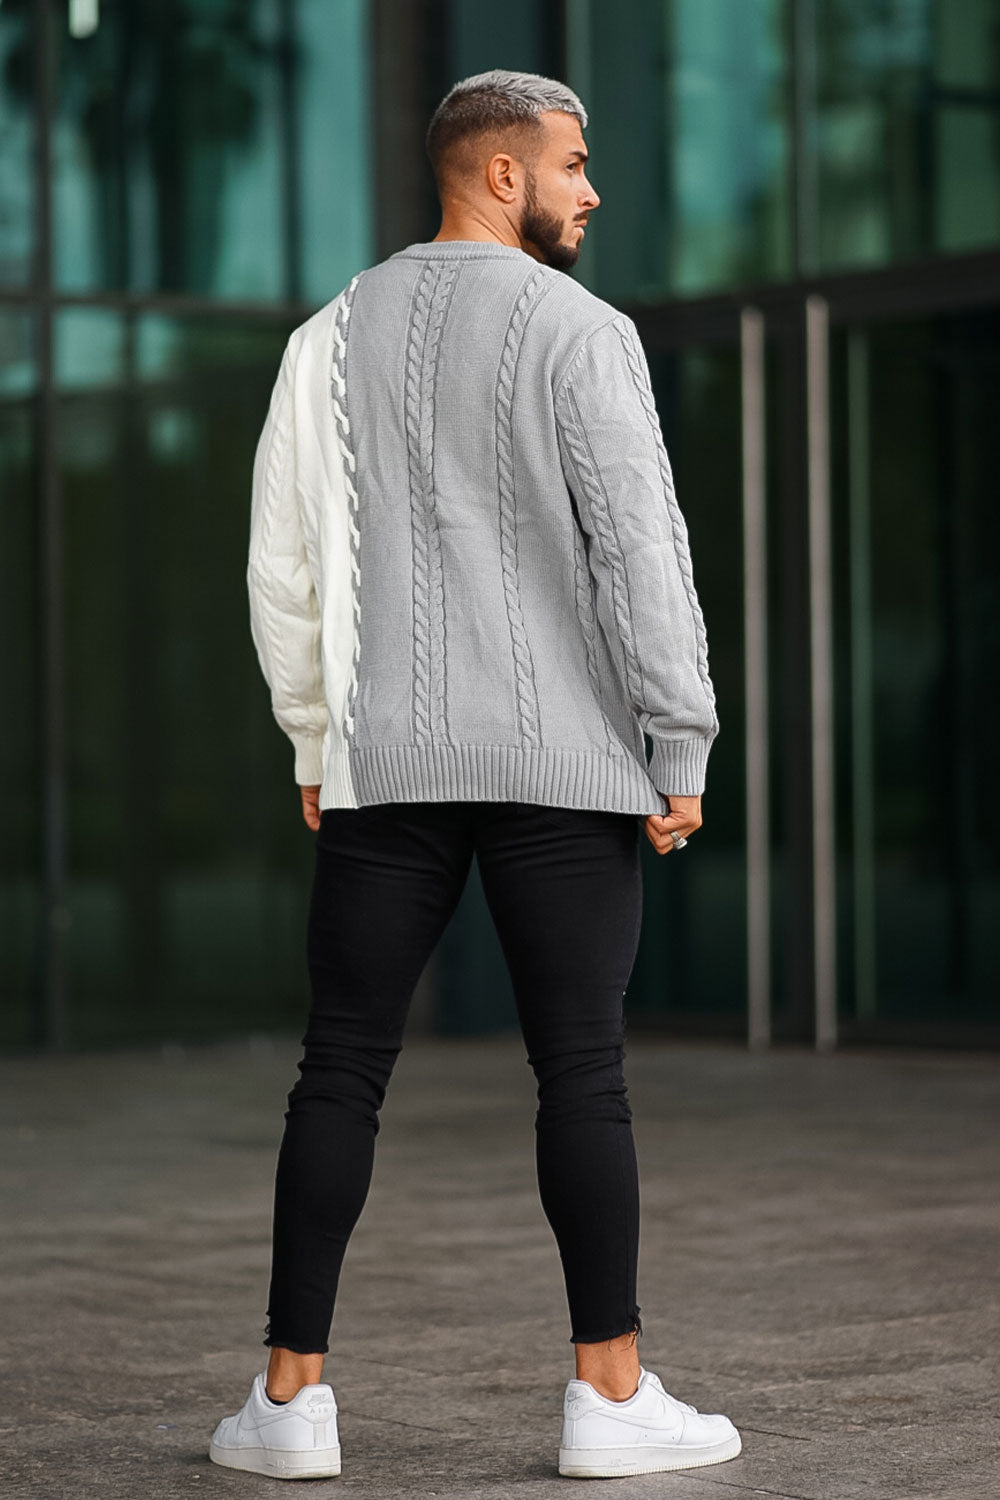 Men's Color Block Sweater - Grey & White